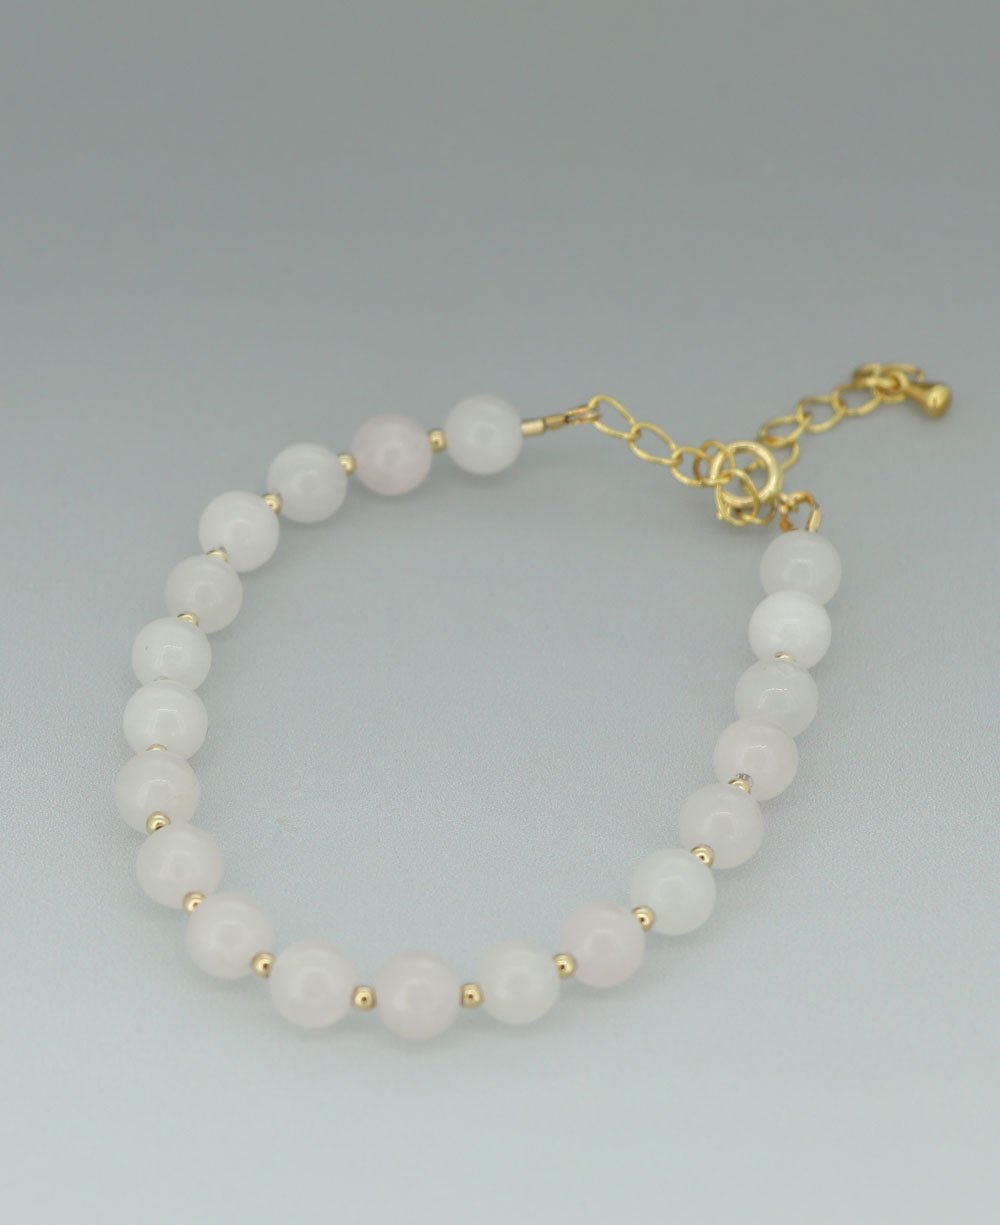 Gemstone Wrist Mala Bracelet, 20 Beads - Bracelets Rose Quartz